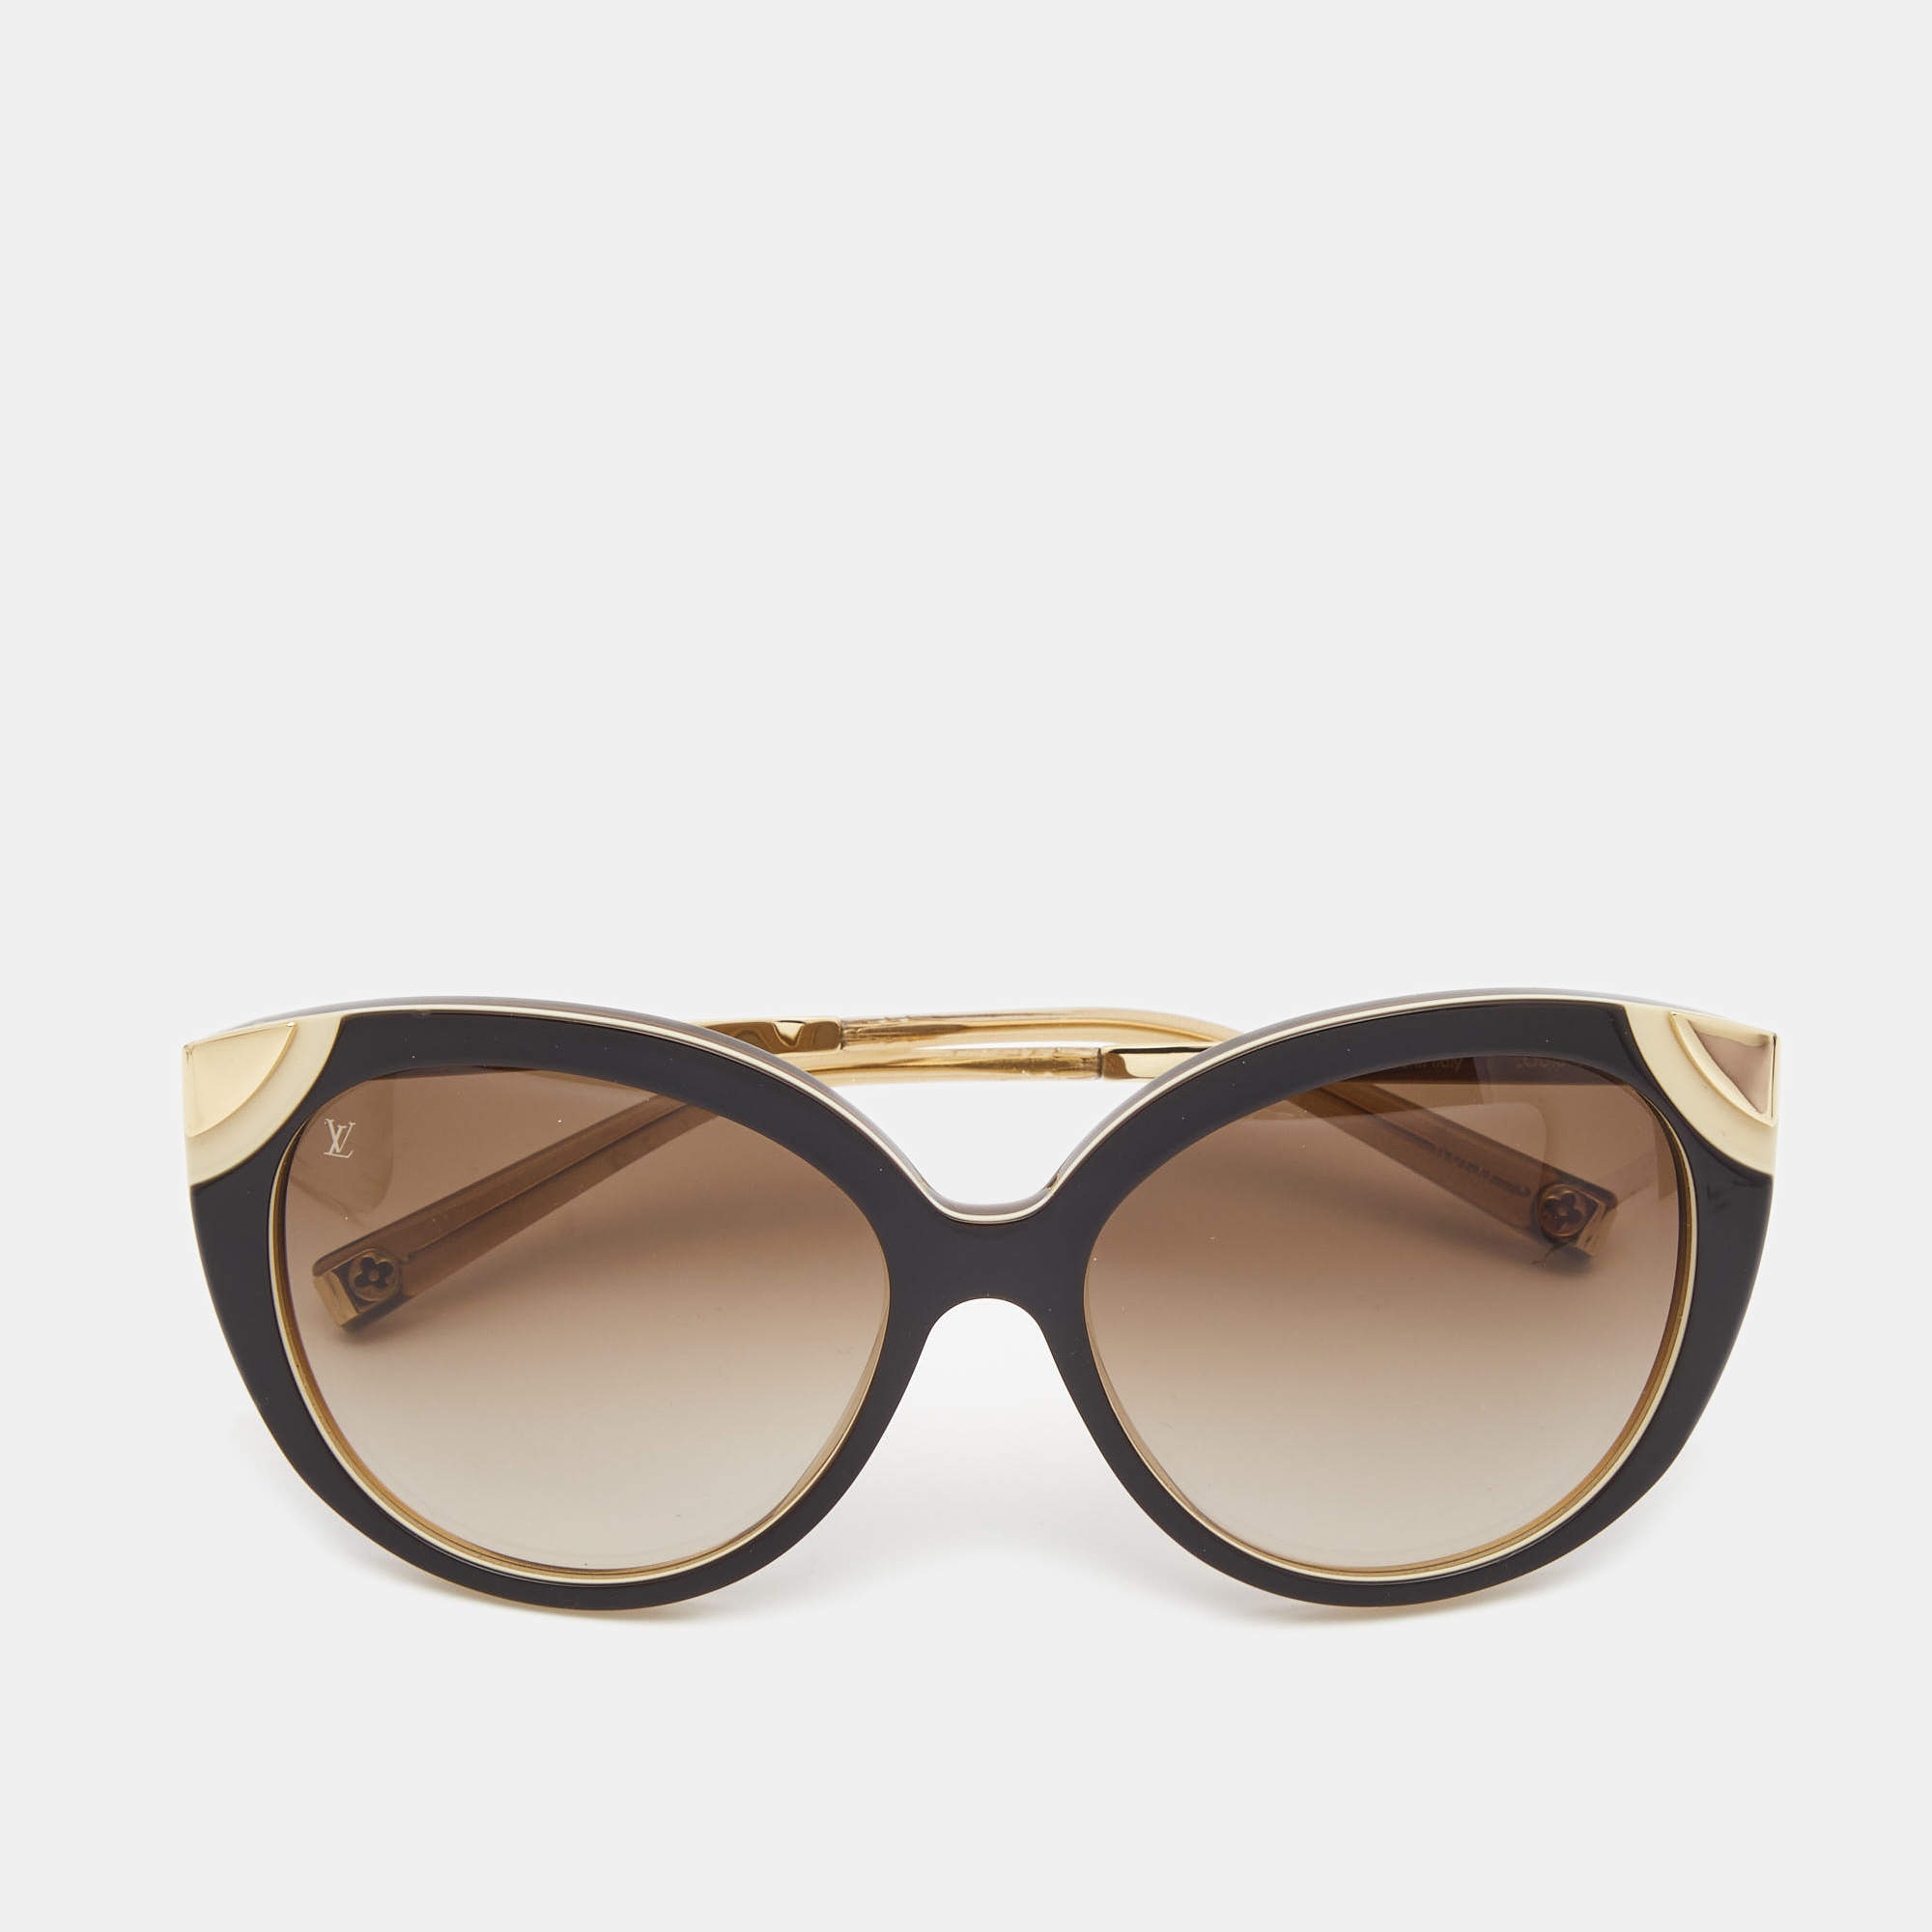 Louis Vuitton Gold Sunglasses for Women for sale